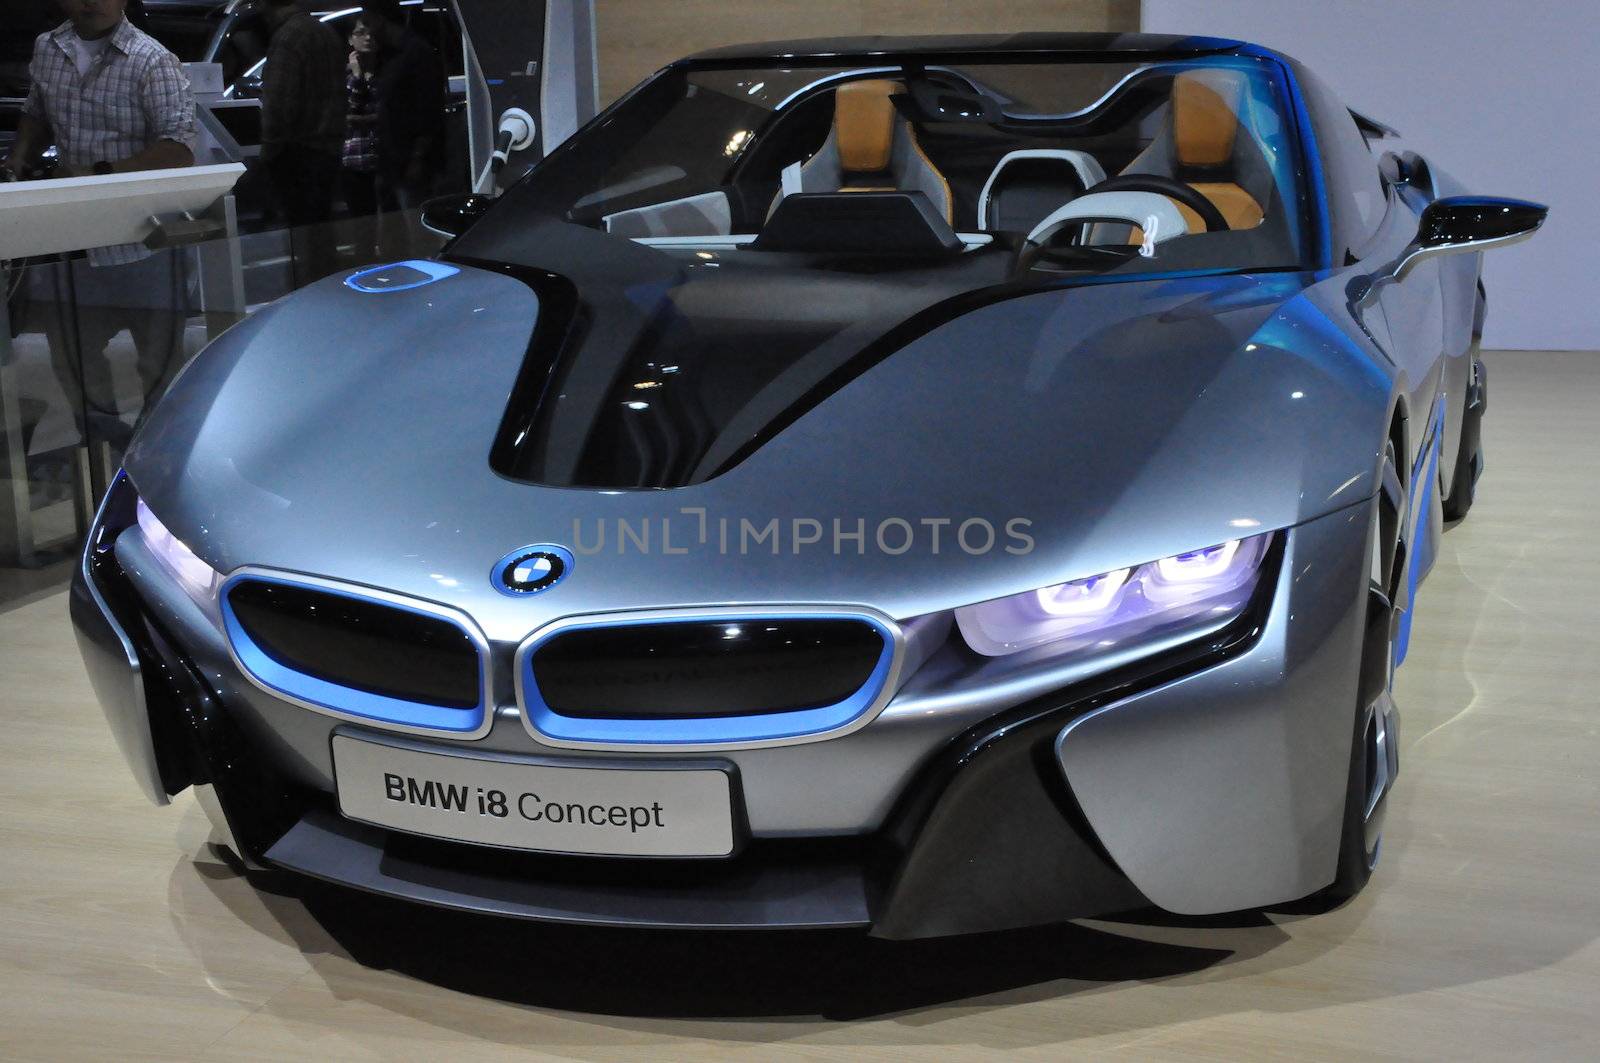 BMW i8 Concept Car by sainaniritu